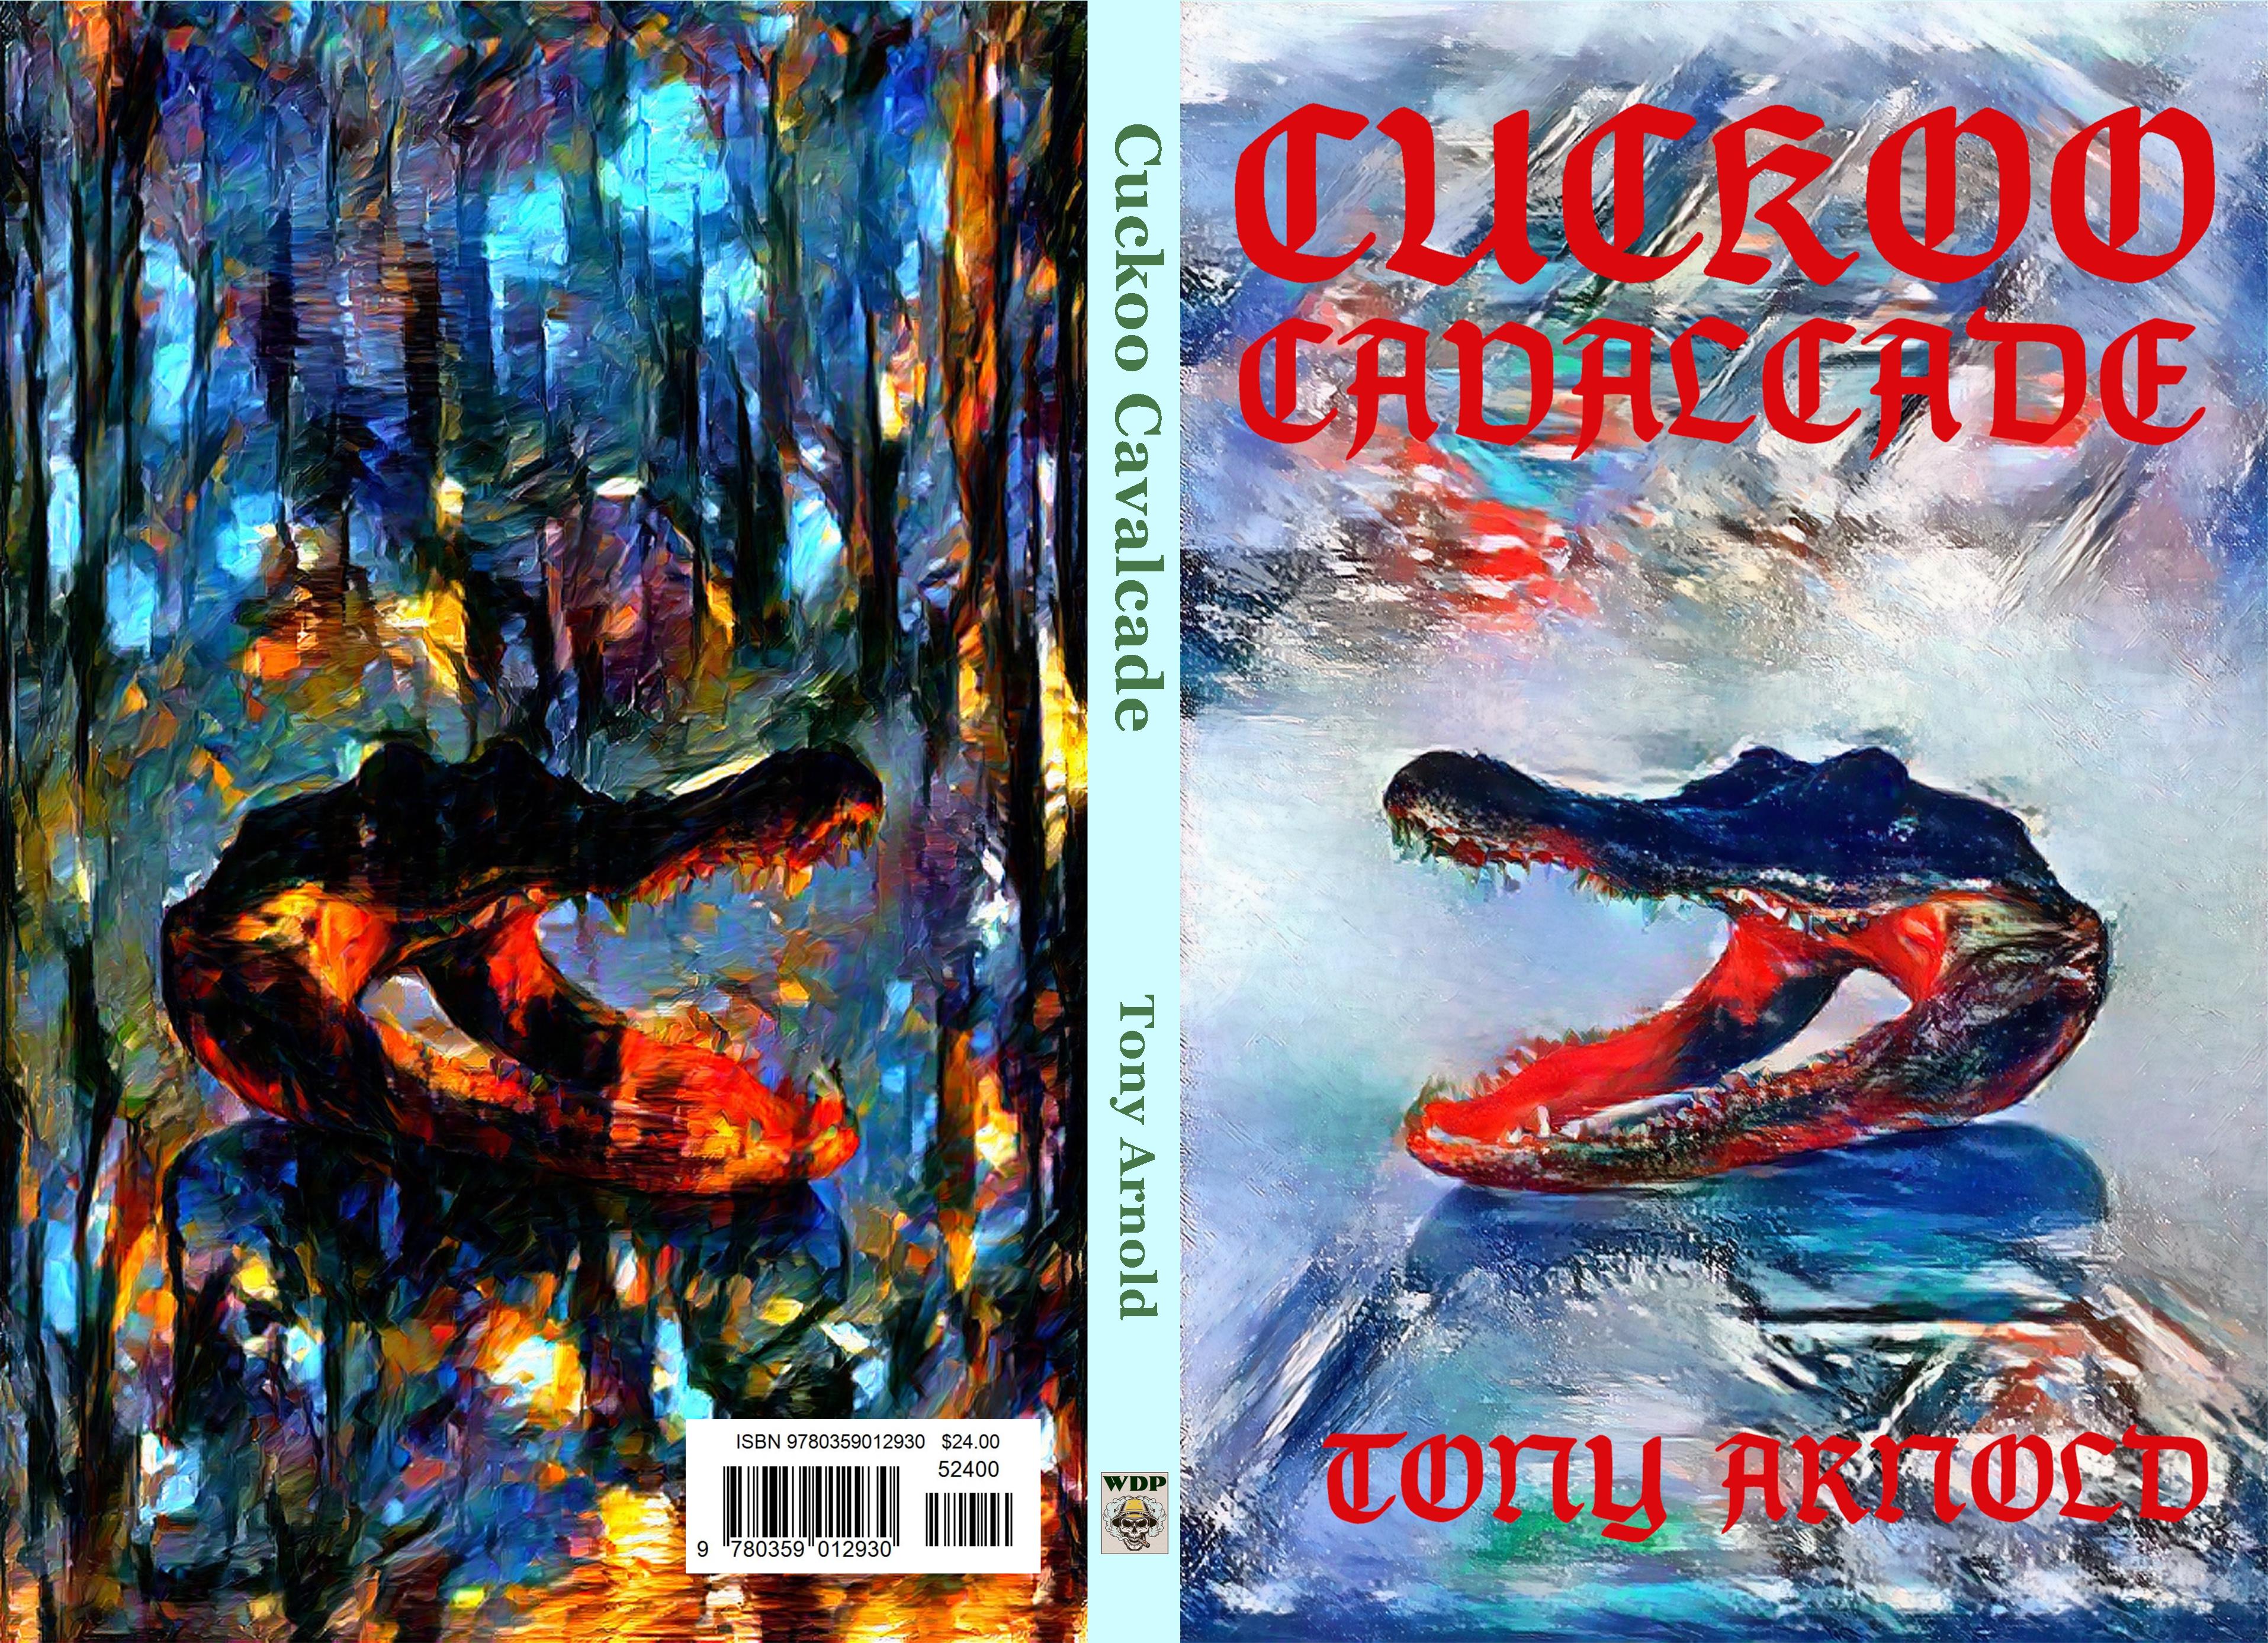 Cuckoo Cavalcade cover image